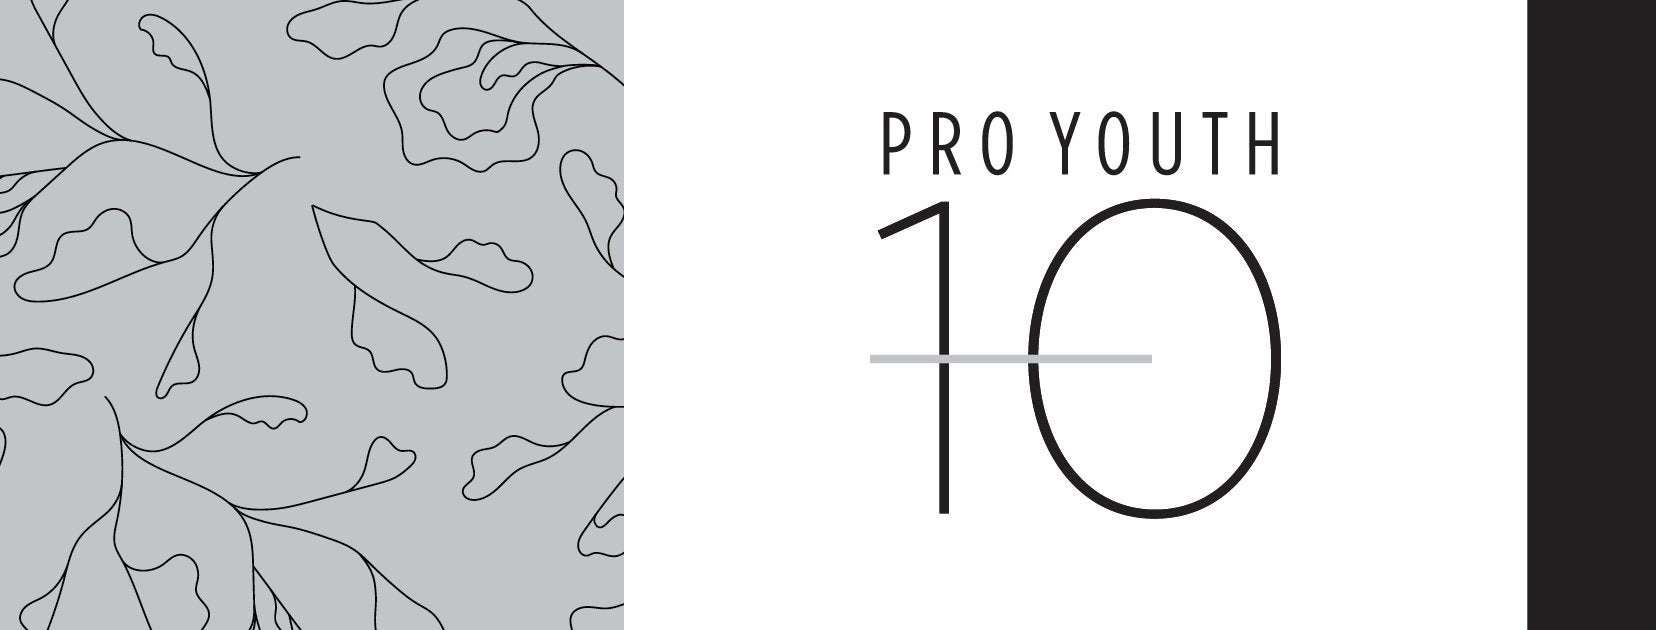 Pro Youth -10